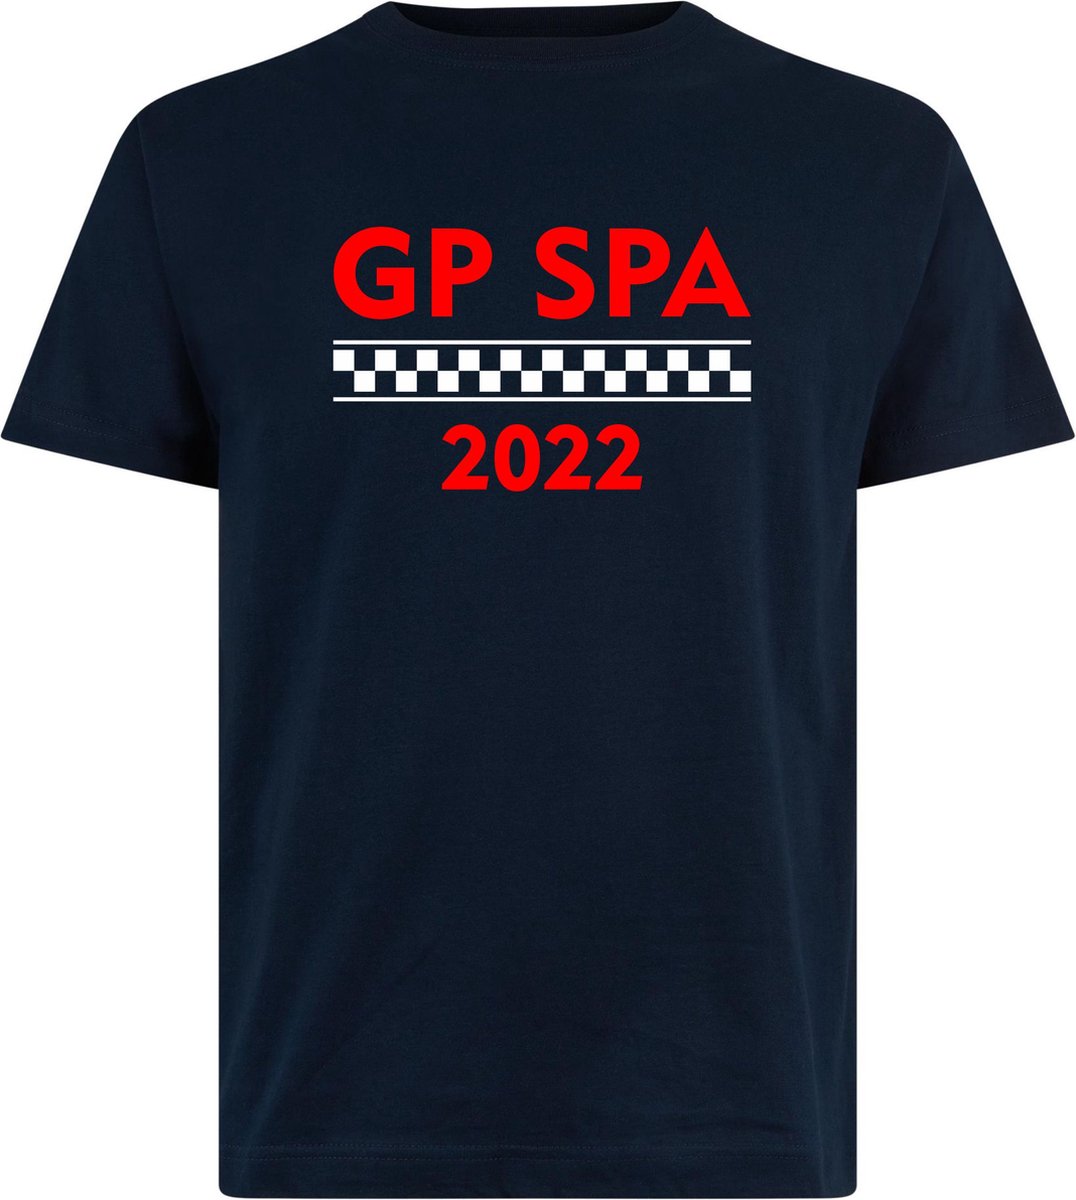 T-shirt kinderen GP Spa 2022 | Max Verstappen / Red Bull Racing / Formule 1 fan | Grand Prix Circuit Spa-Francorchamps | kleding shirt | Navy | maat 80